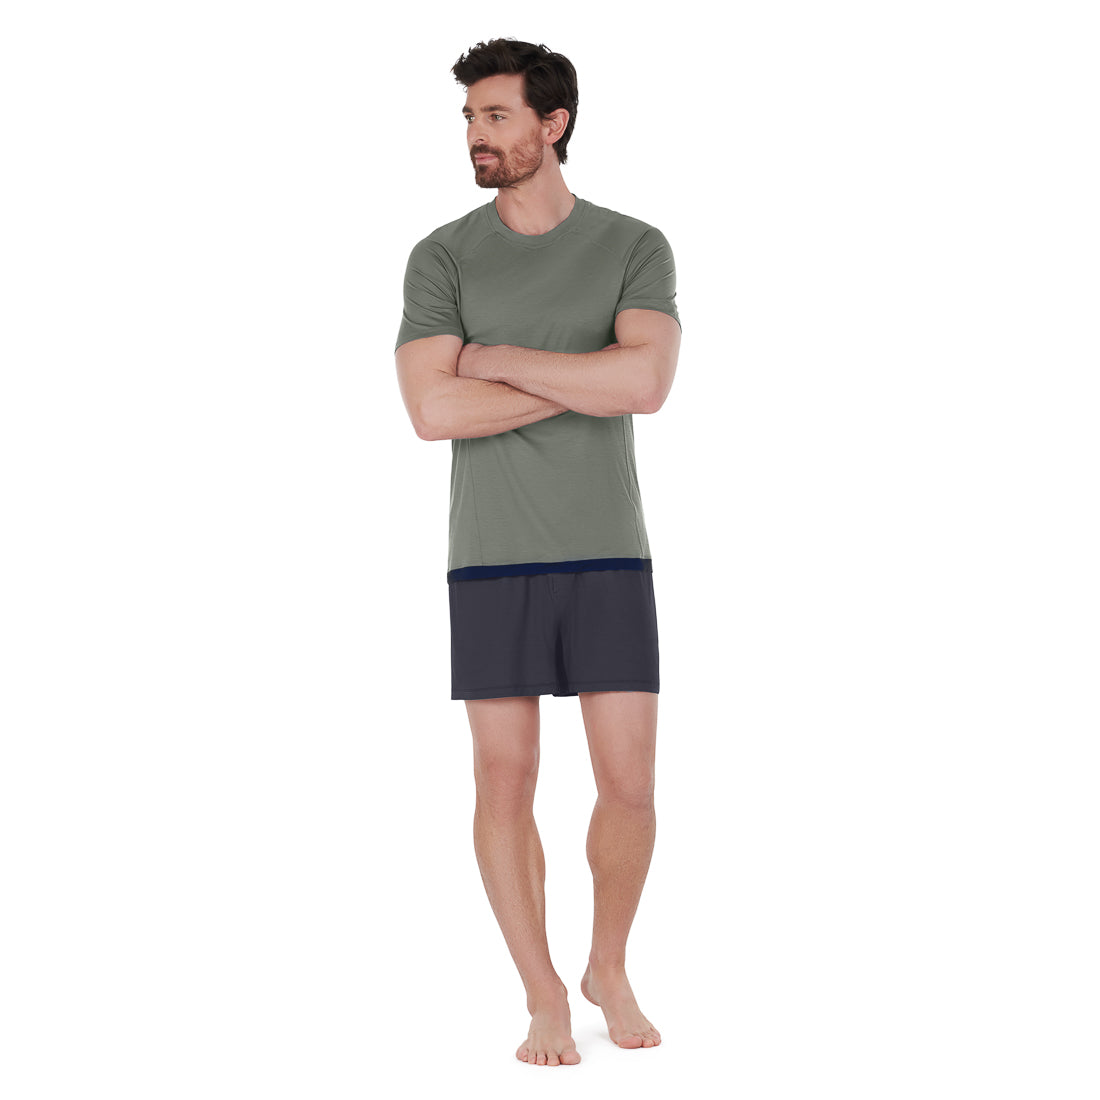 Cooling sleepwear men || Cool grey